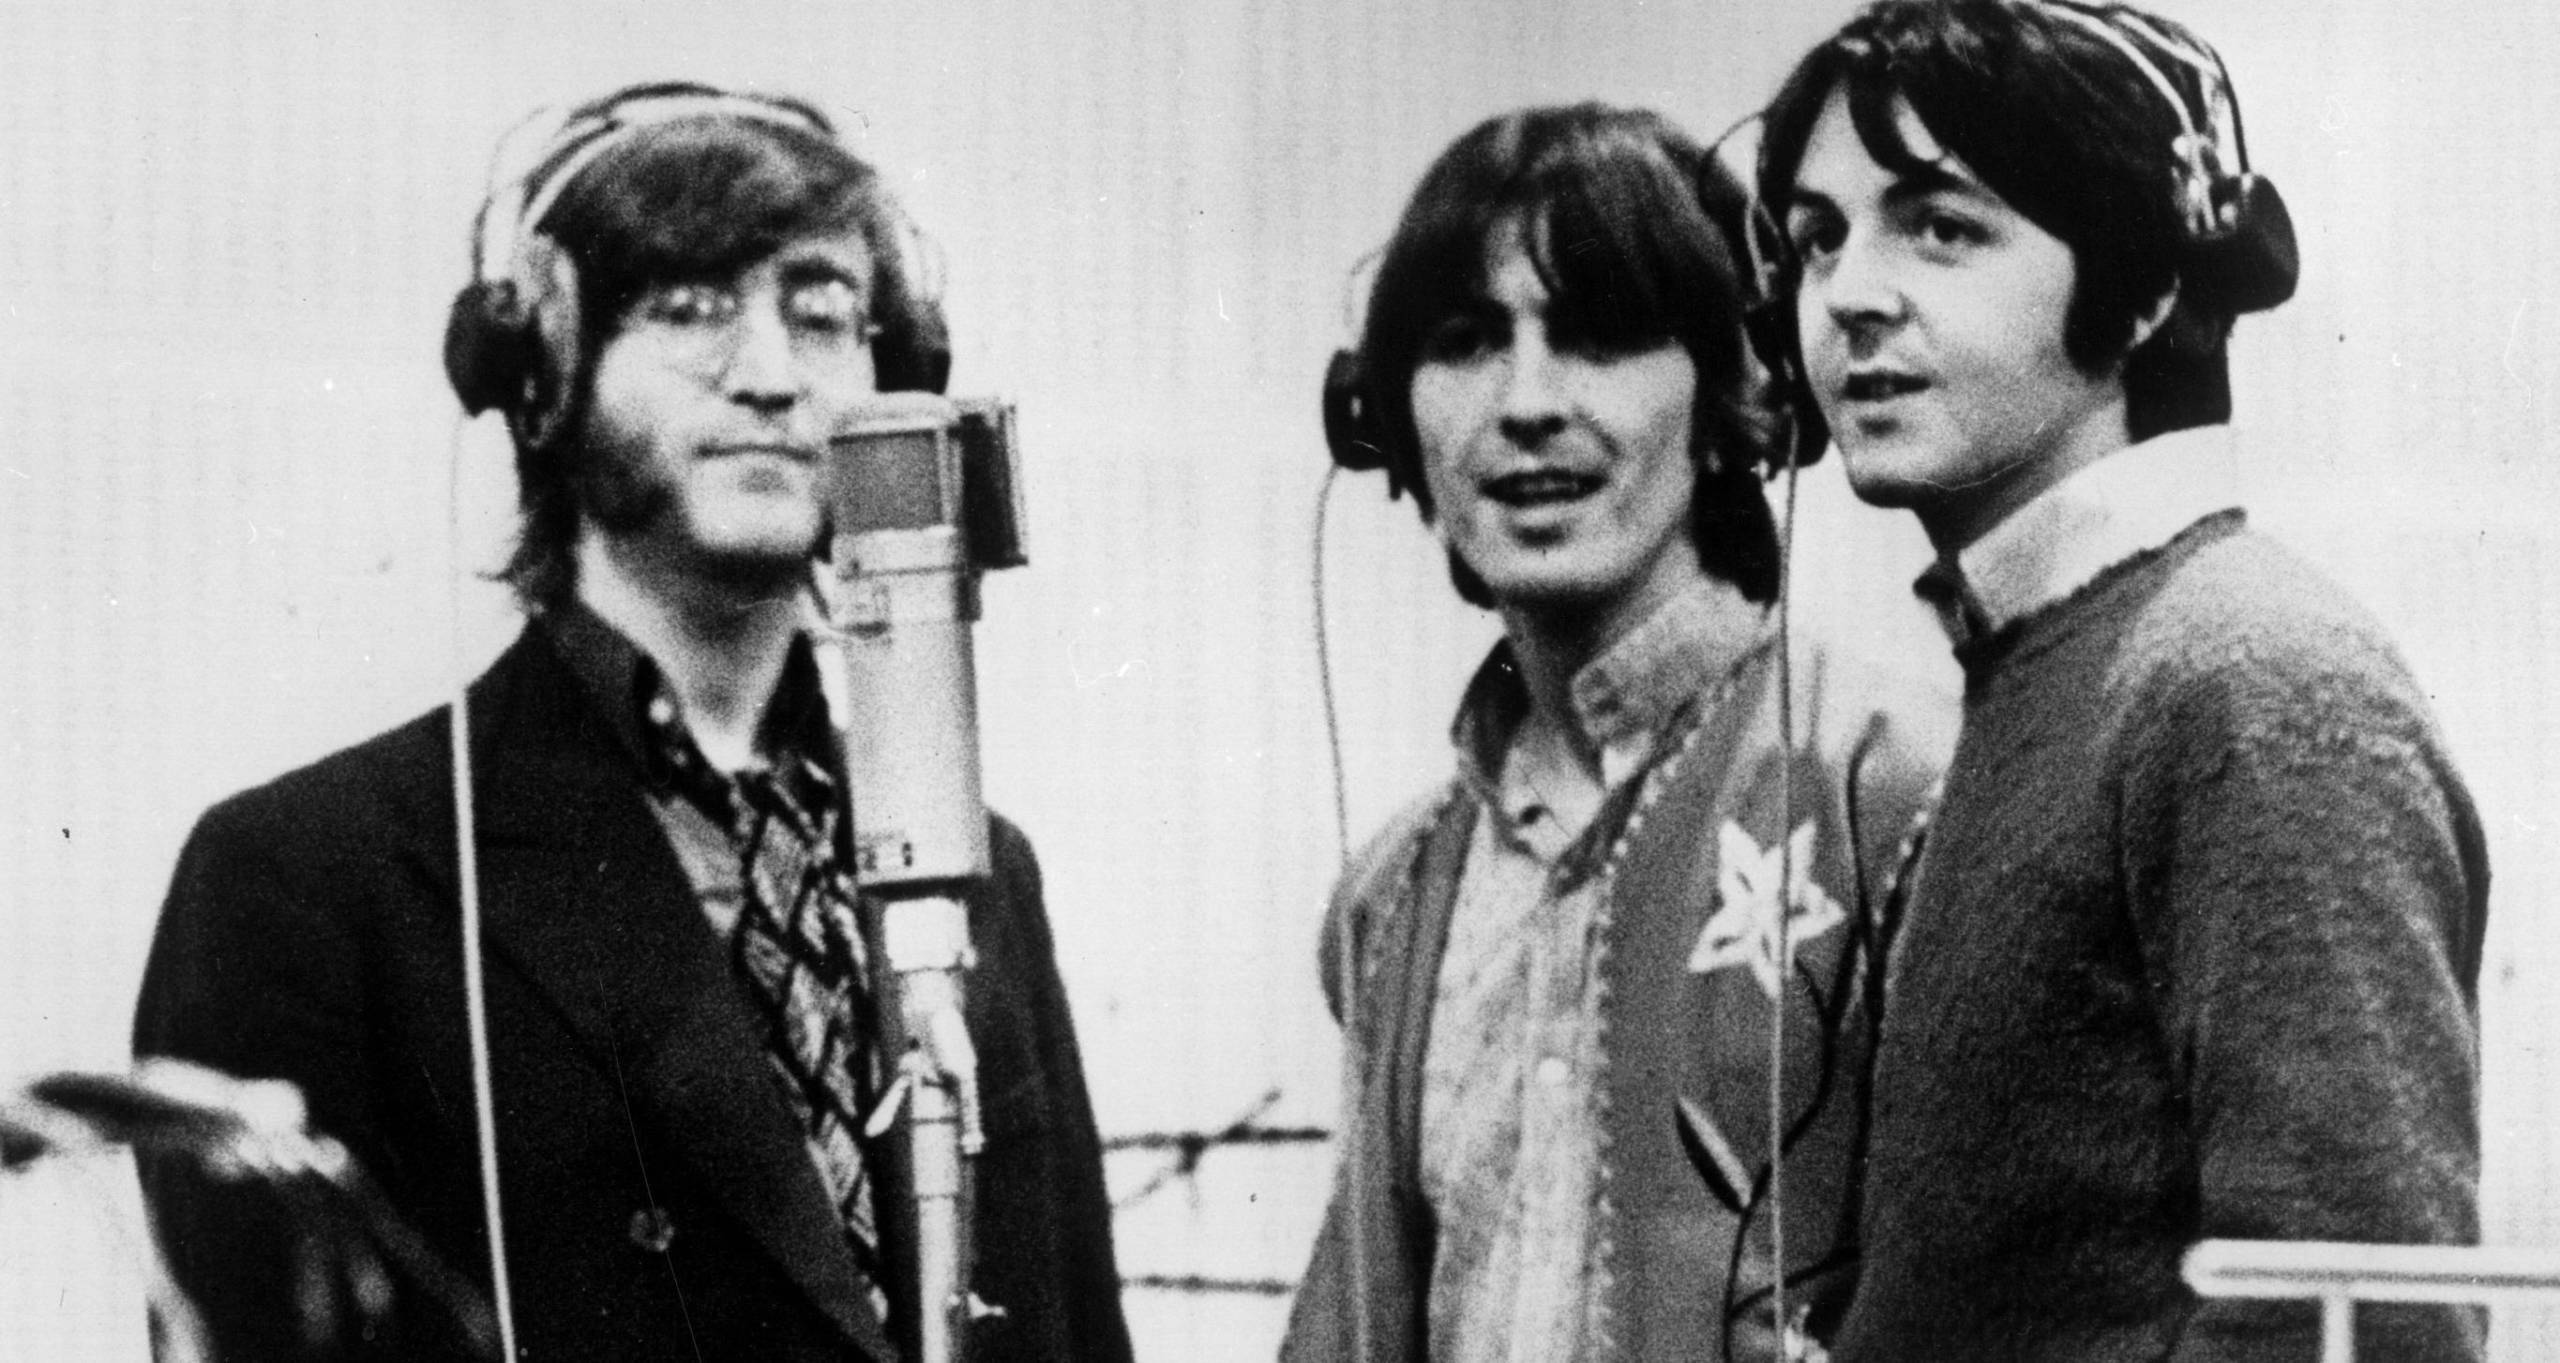 Beatles 1968